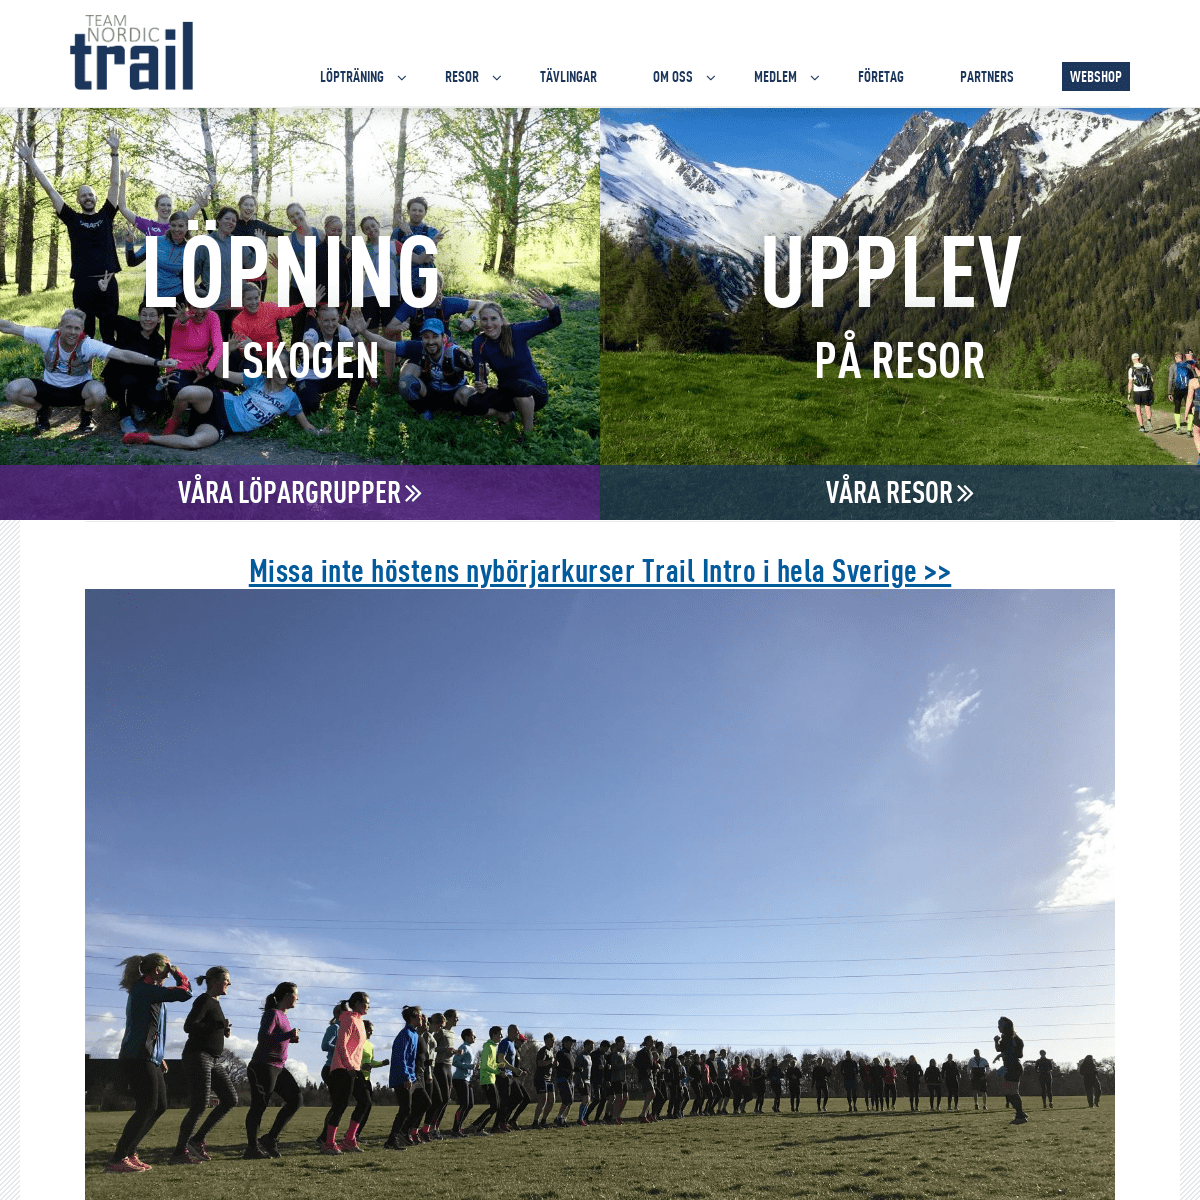 Team Nordic Trail –